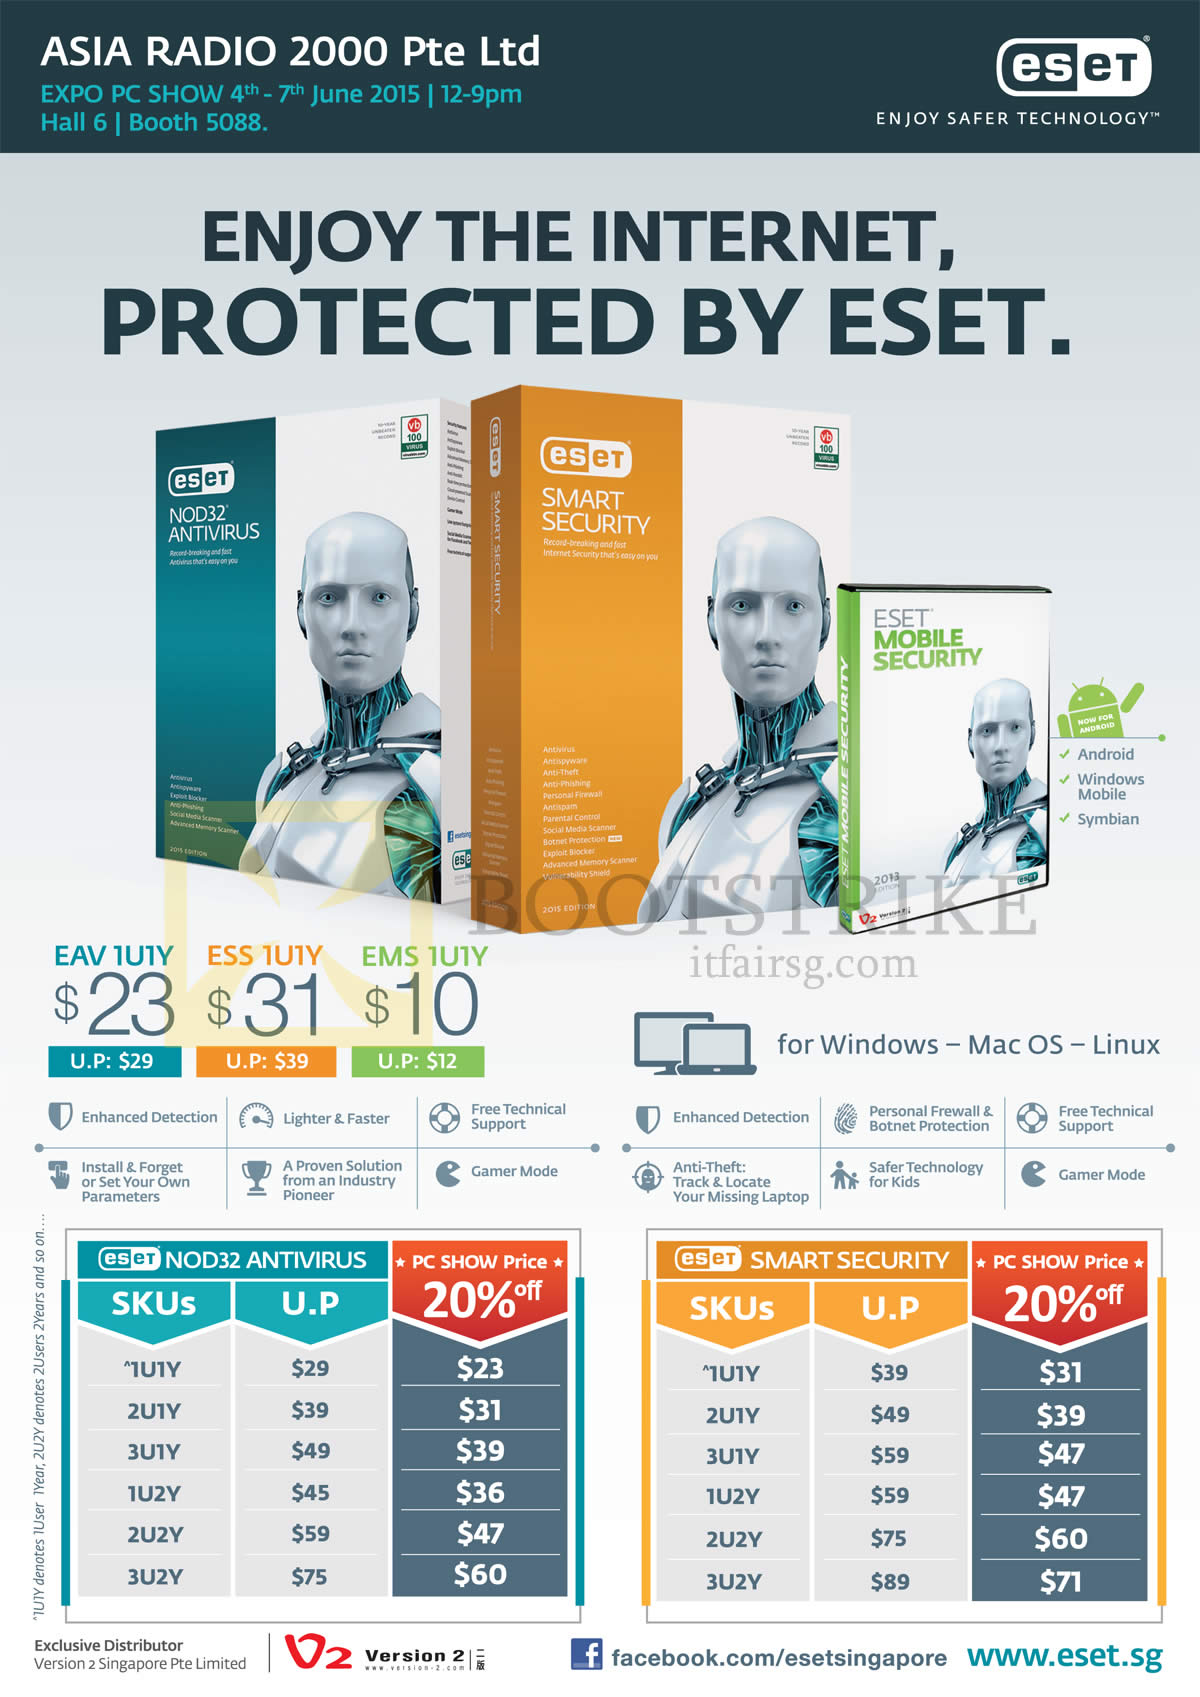 PC SHOW 2015 price list image brochure of Asia Radio ESET Smart Security, Nod32 Antivirus